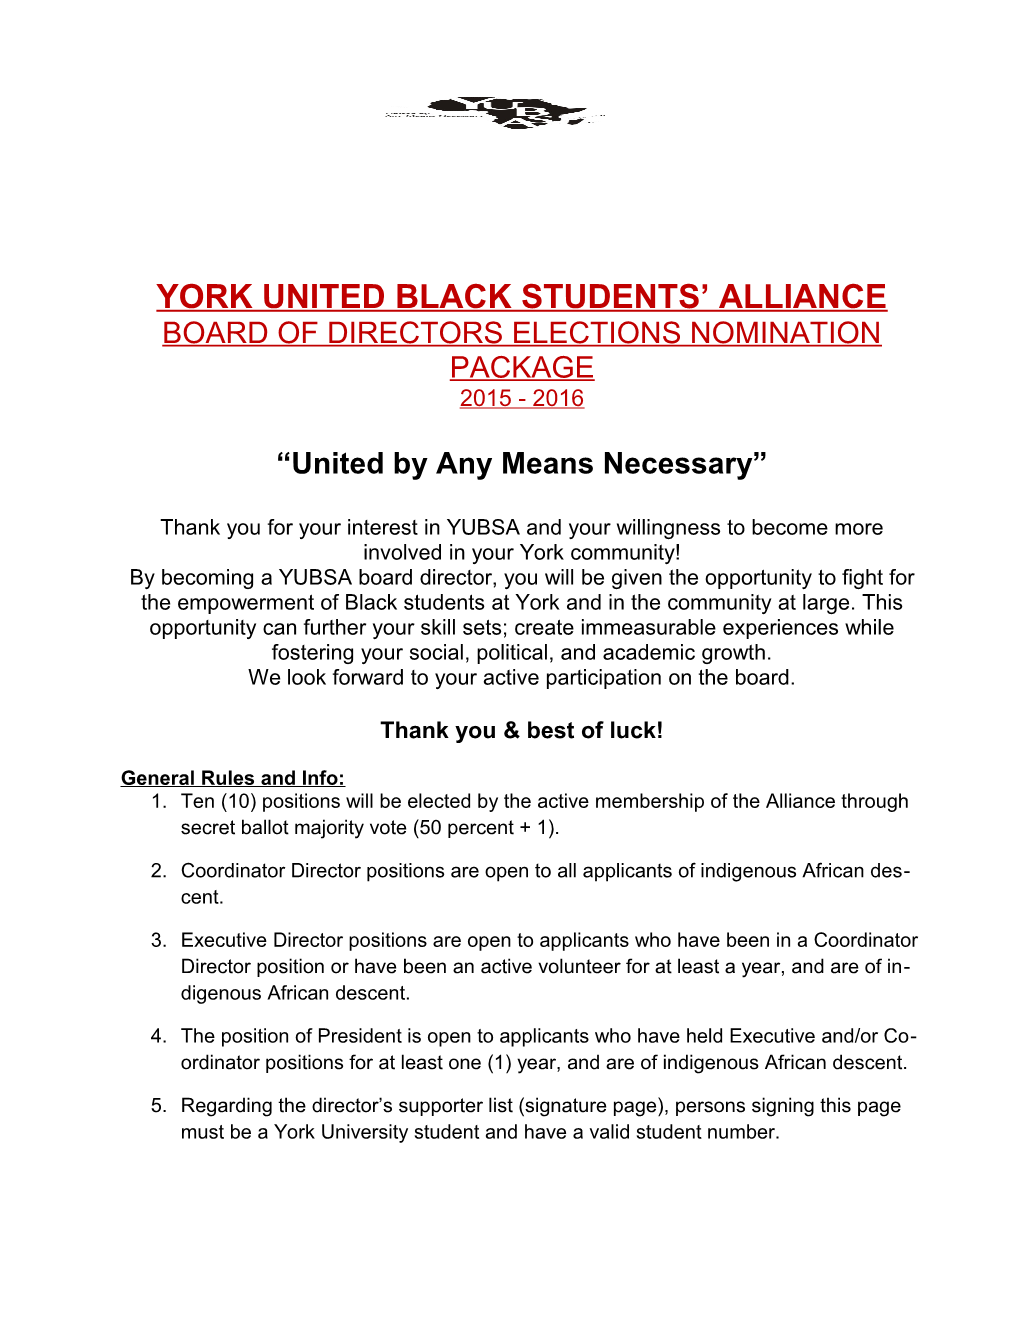 York United Black Students Alliance